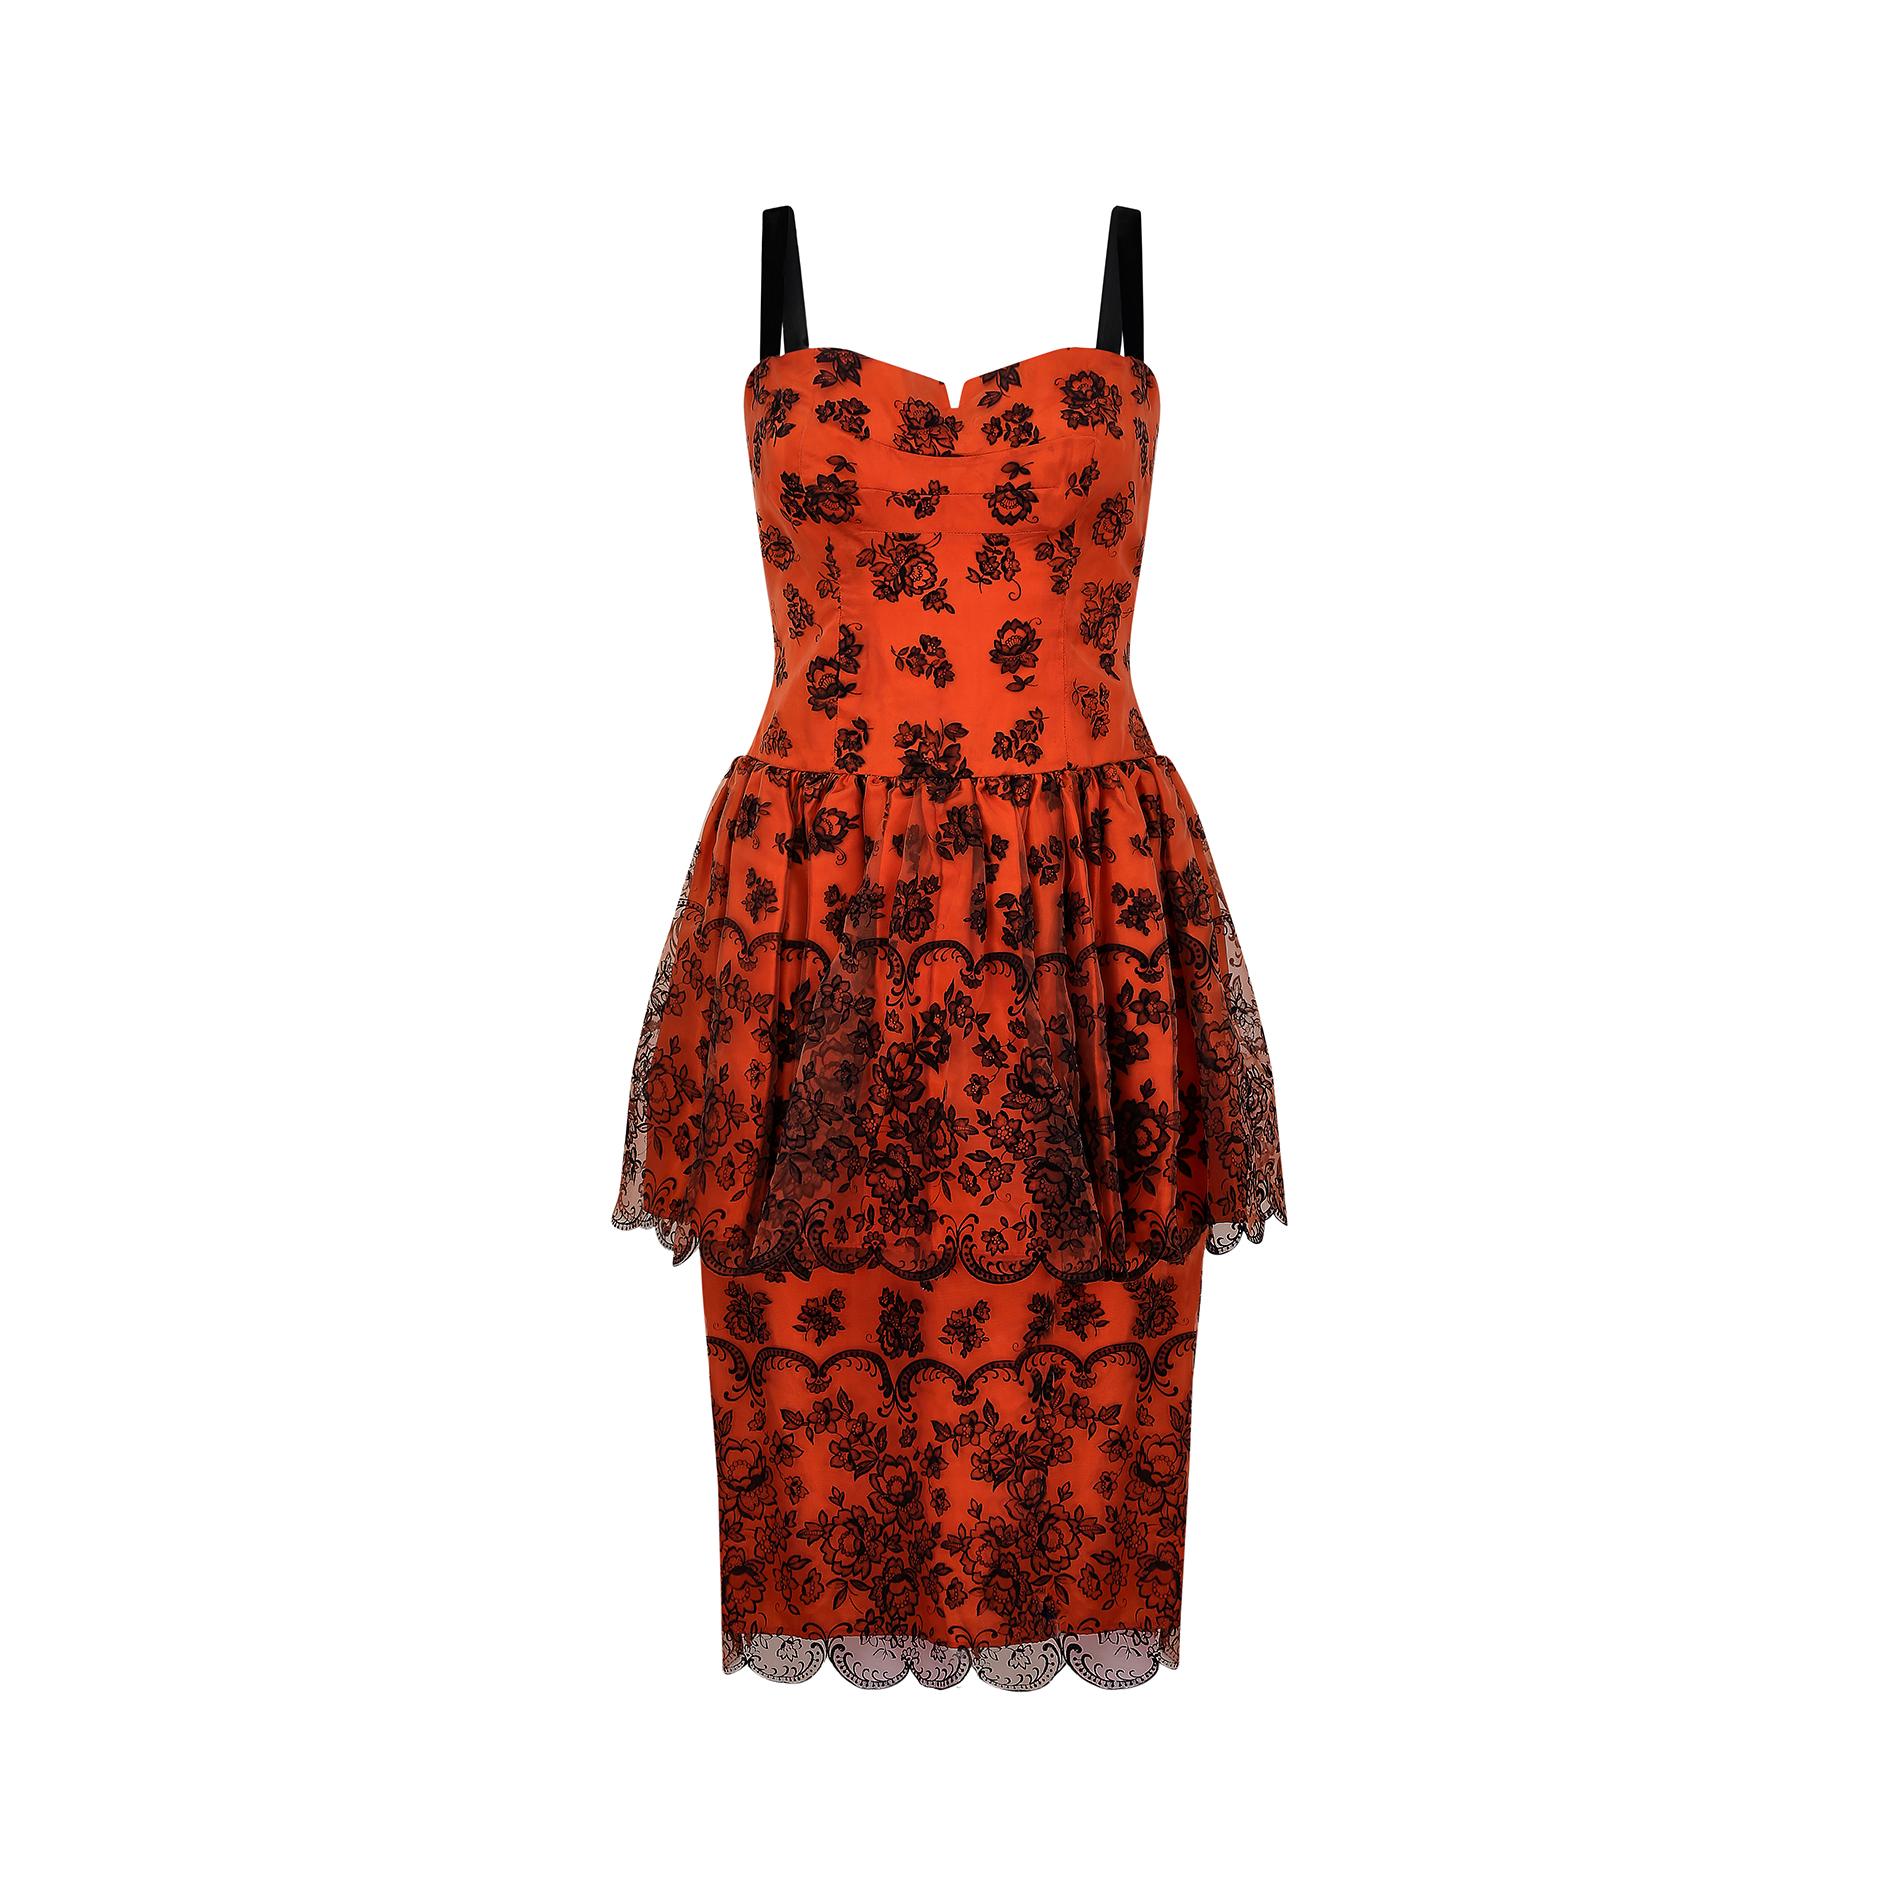 1960s orange and black flock print dress by 